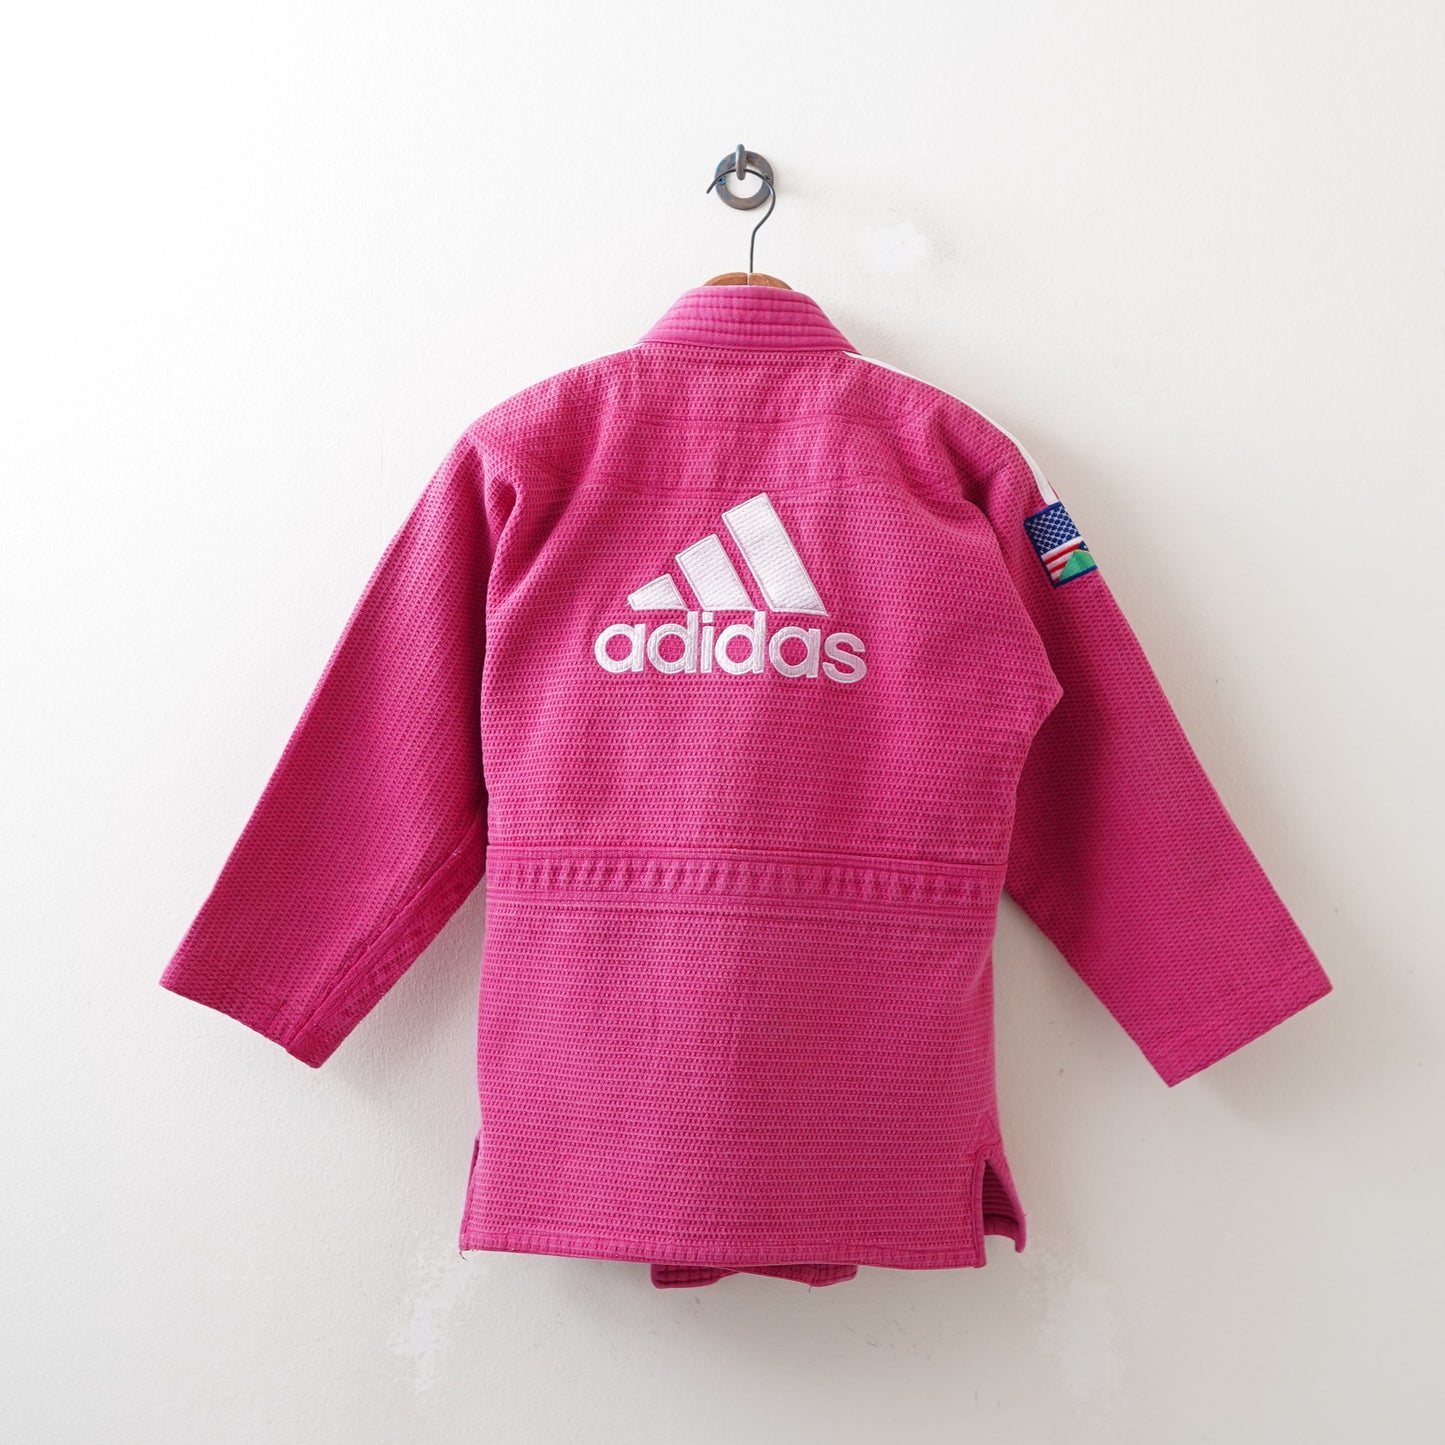 adidas embroidery judo jacket